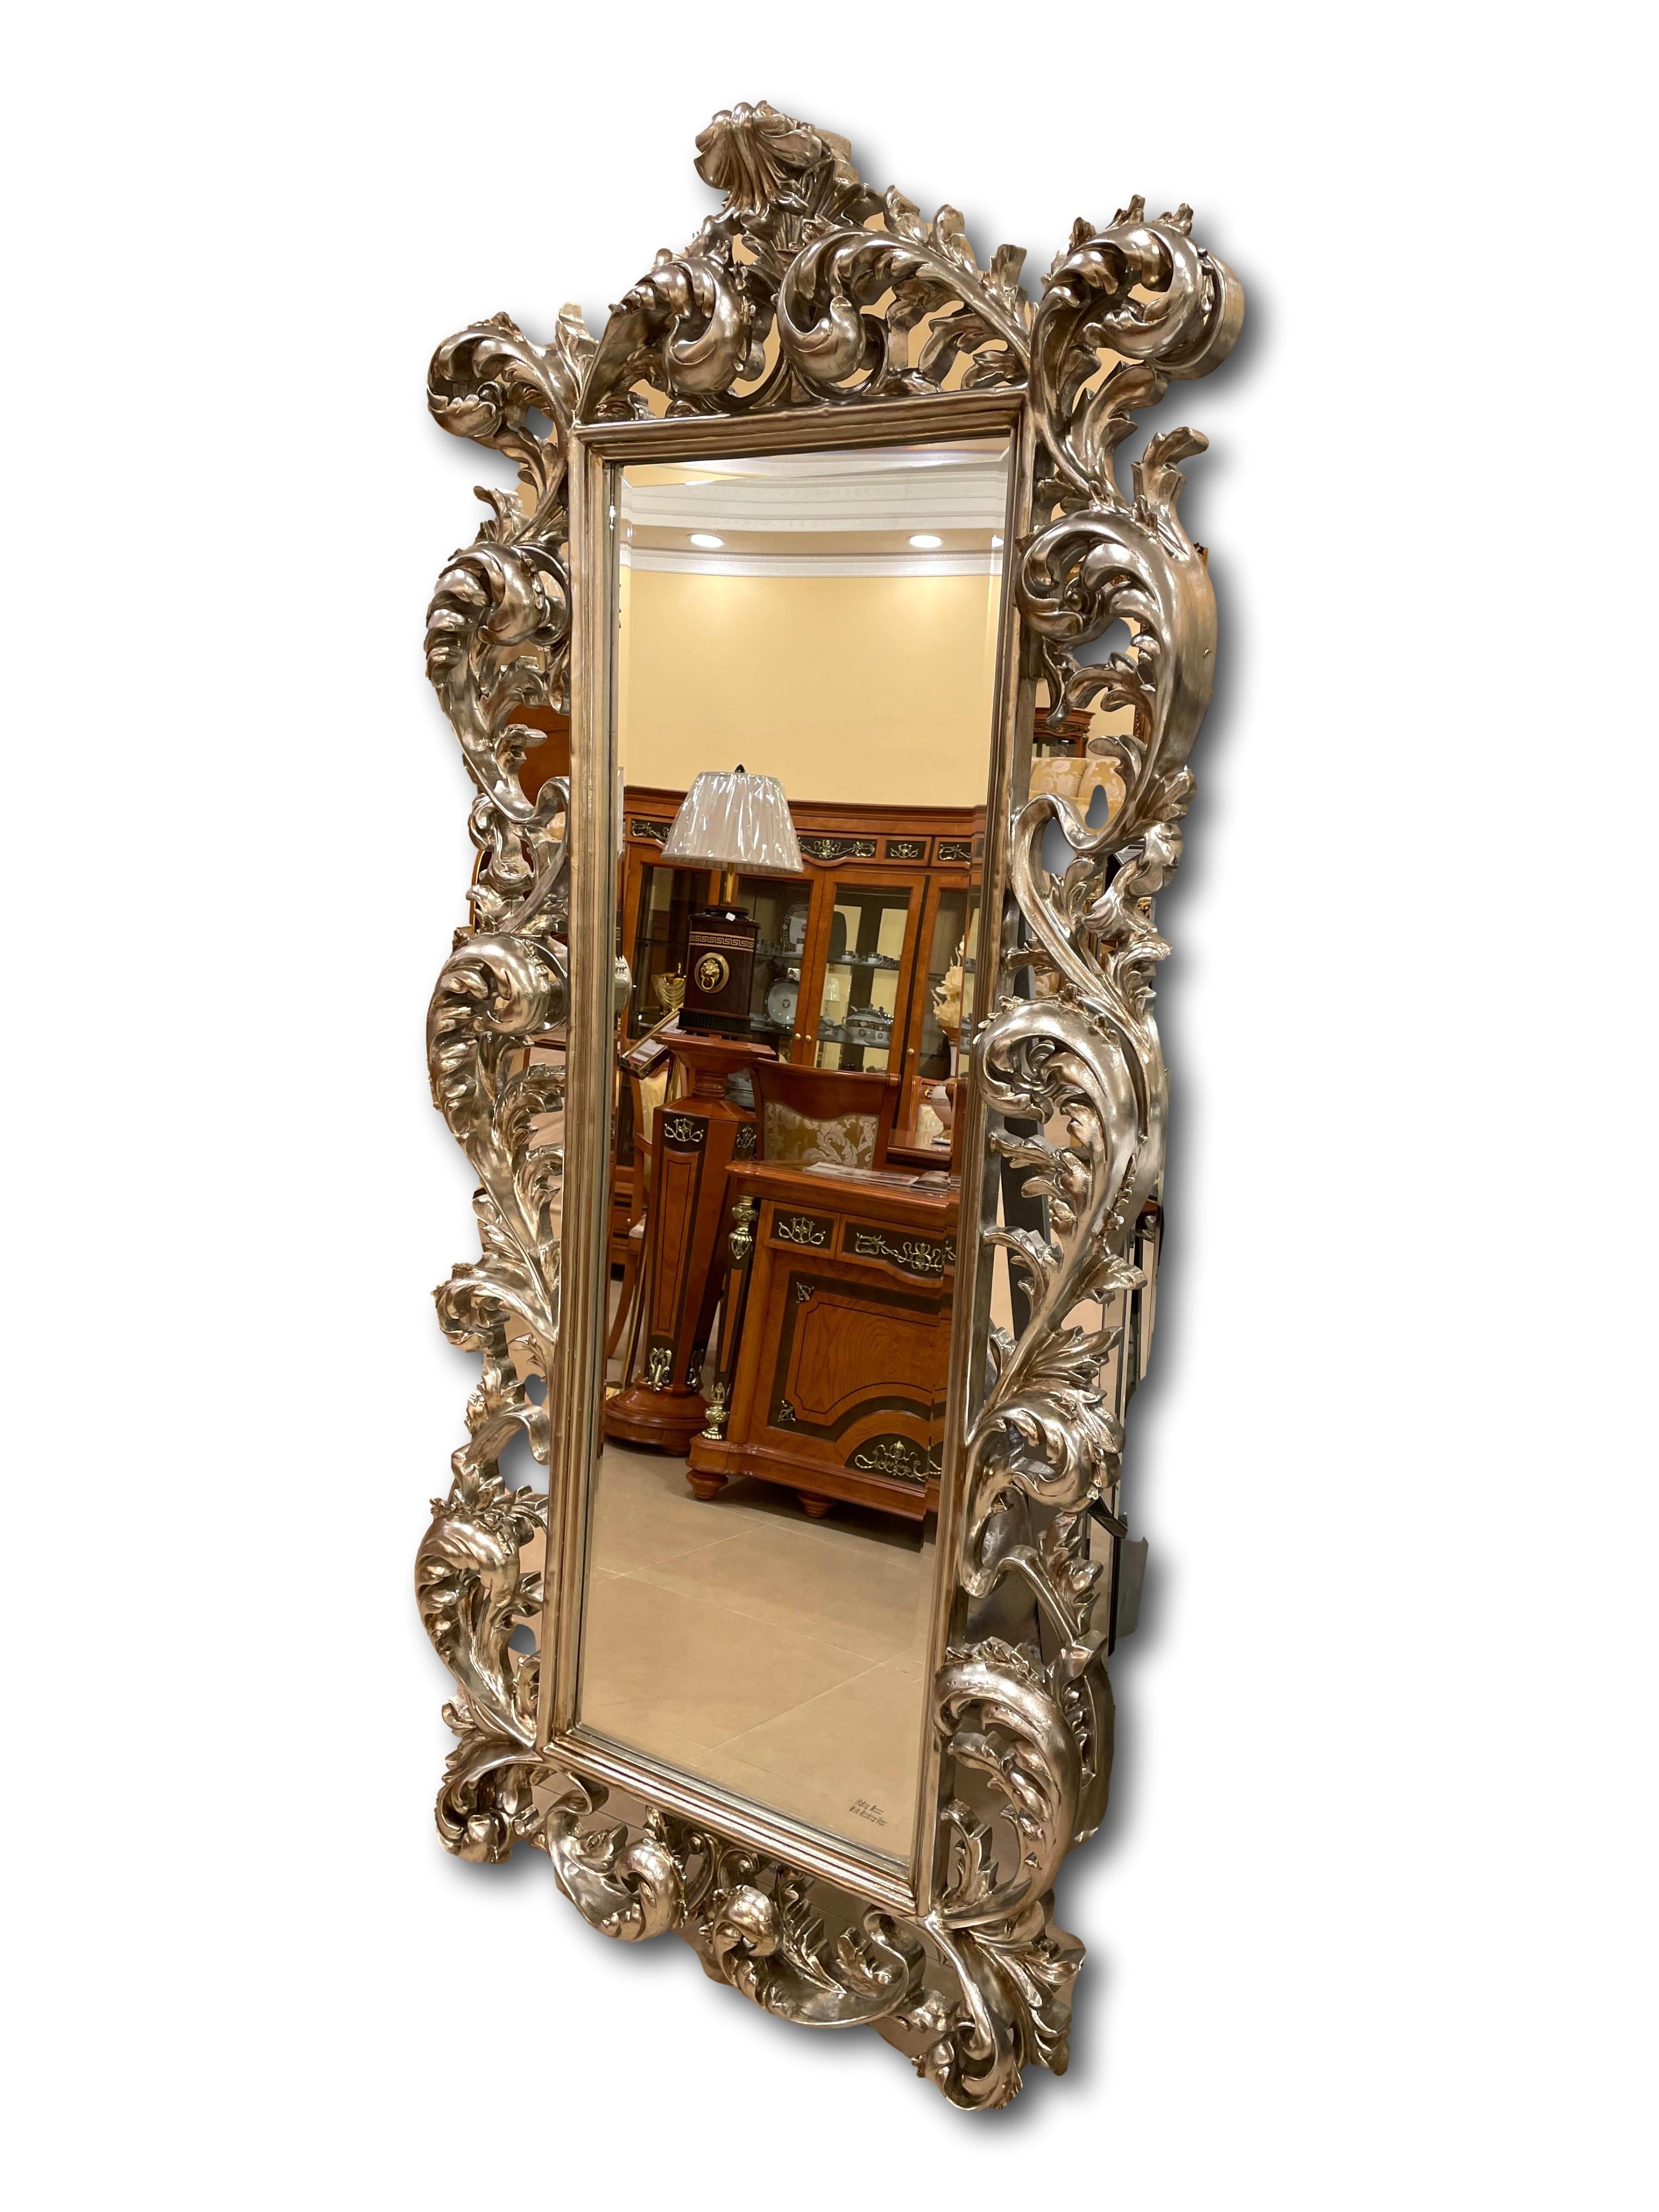 Exclusive mirror in antique / baroque style 195 x 85 cm